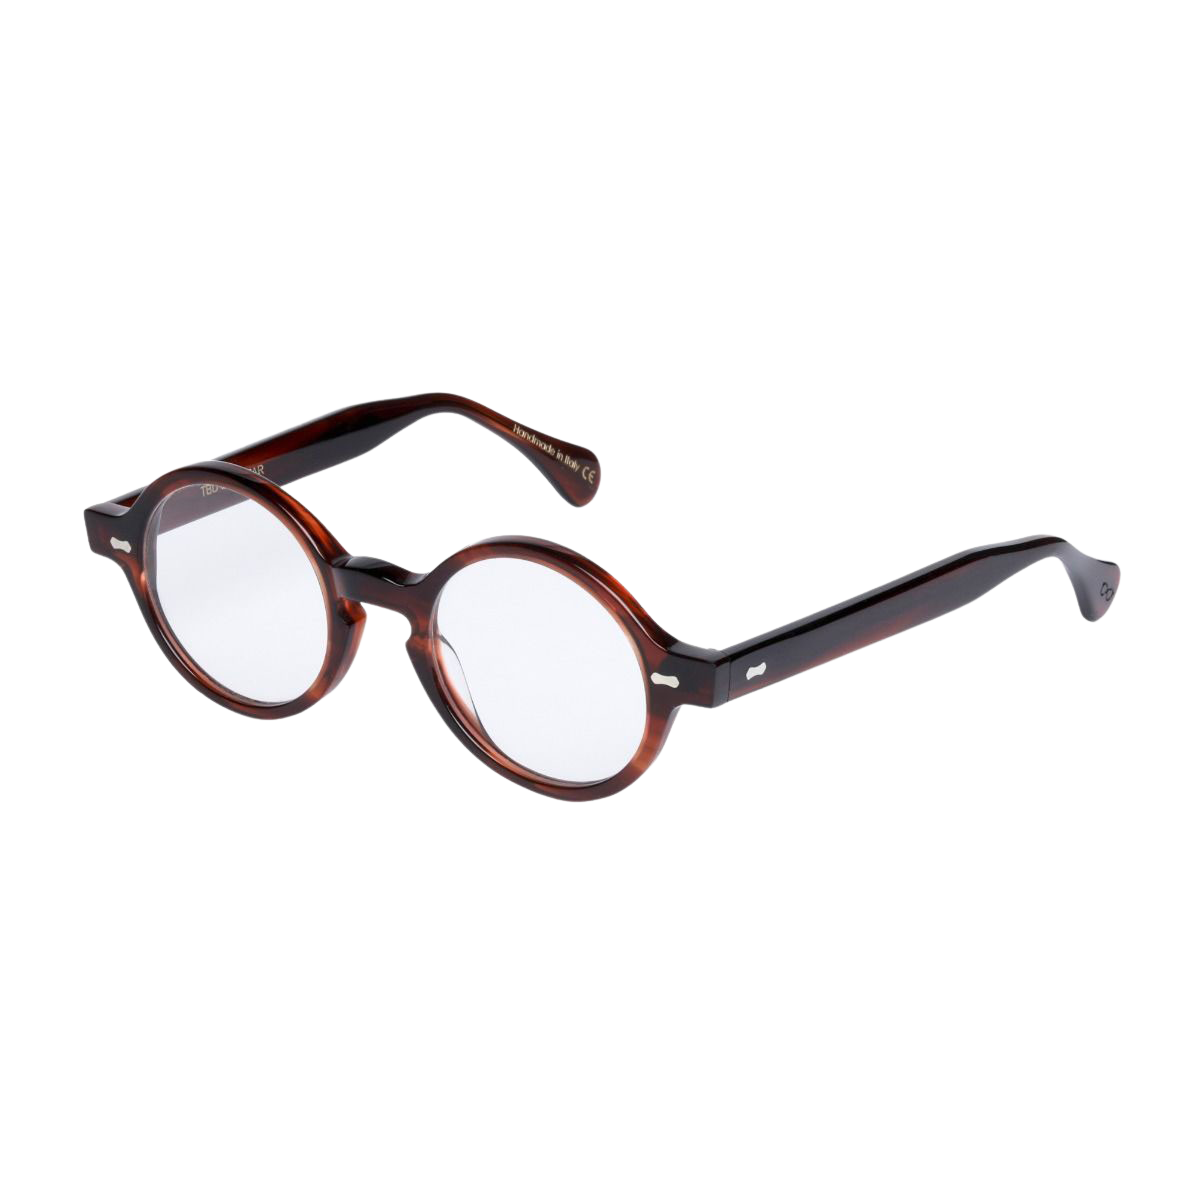 The Bespoke Dudes Eyewear Oxford Havana Optical Glasses 46mm Feature